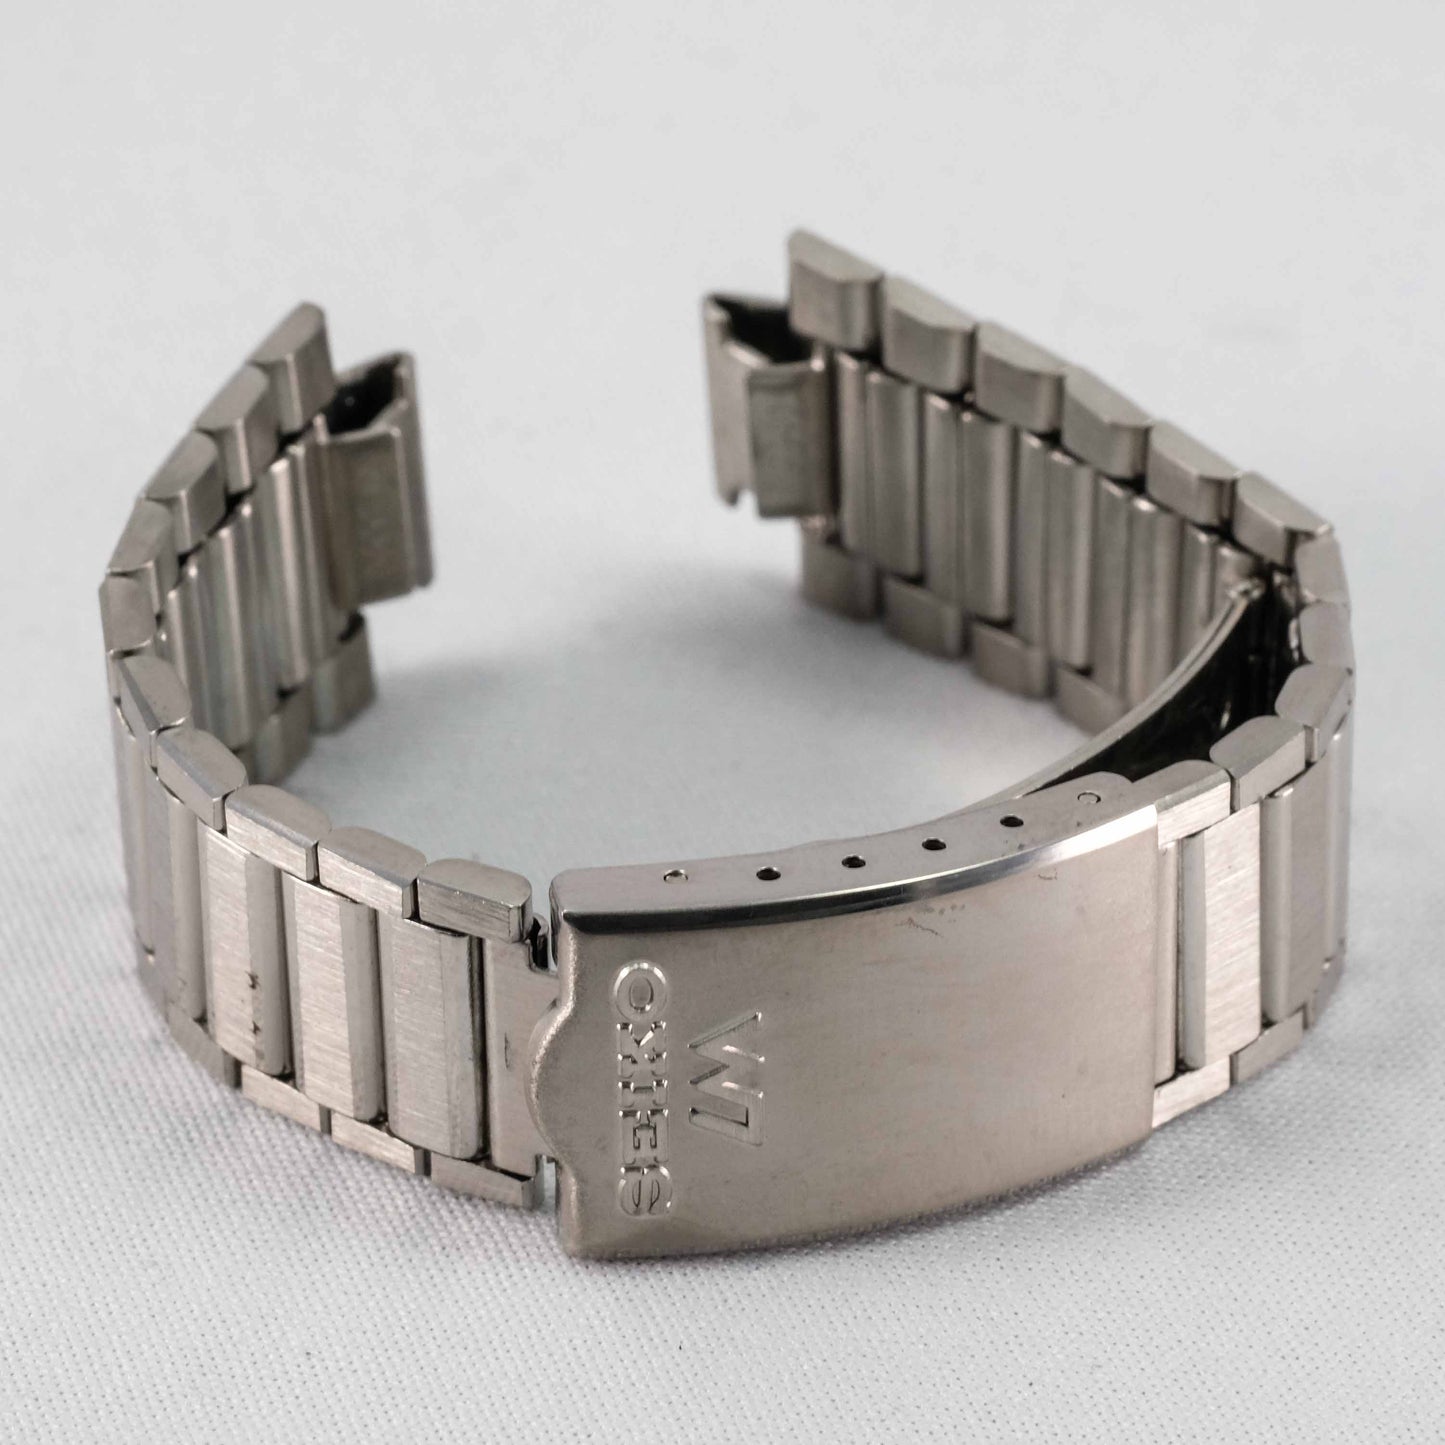 Seiko LM bracelet